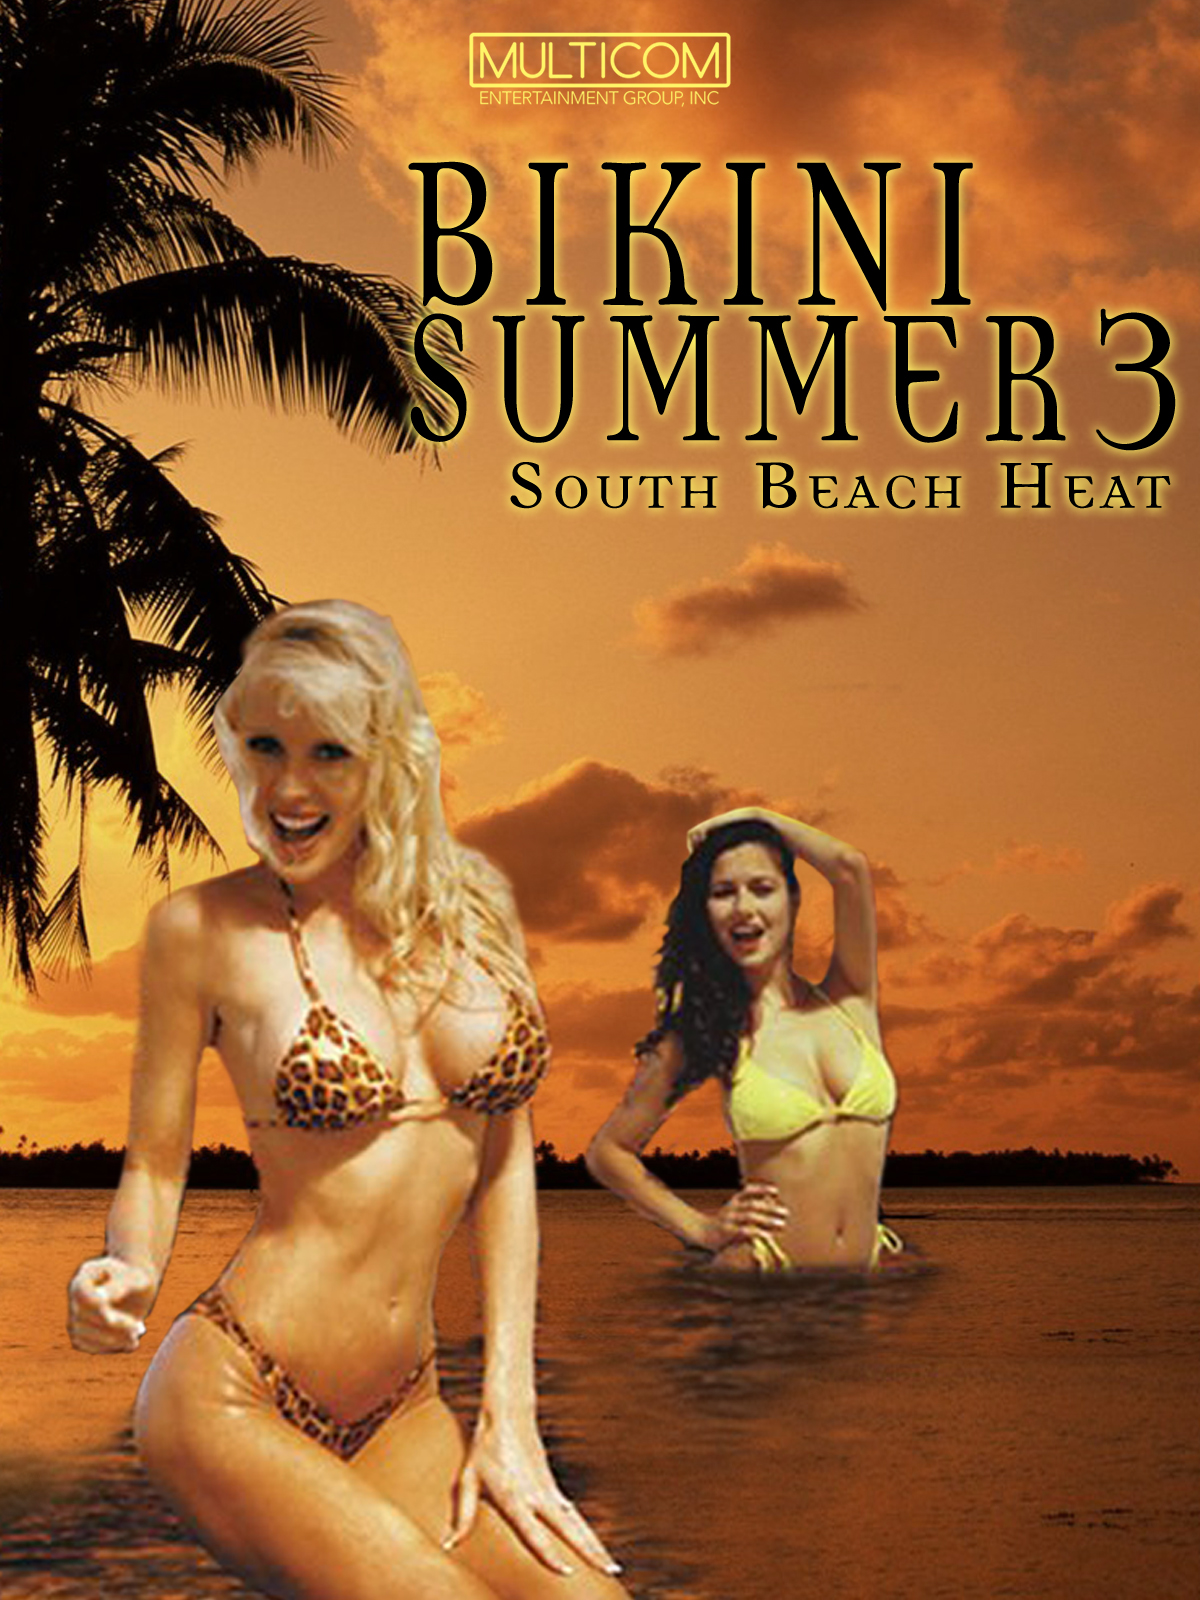 Bikini Summer III: South Beach Heat (1997) Screenshot 1